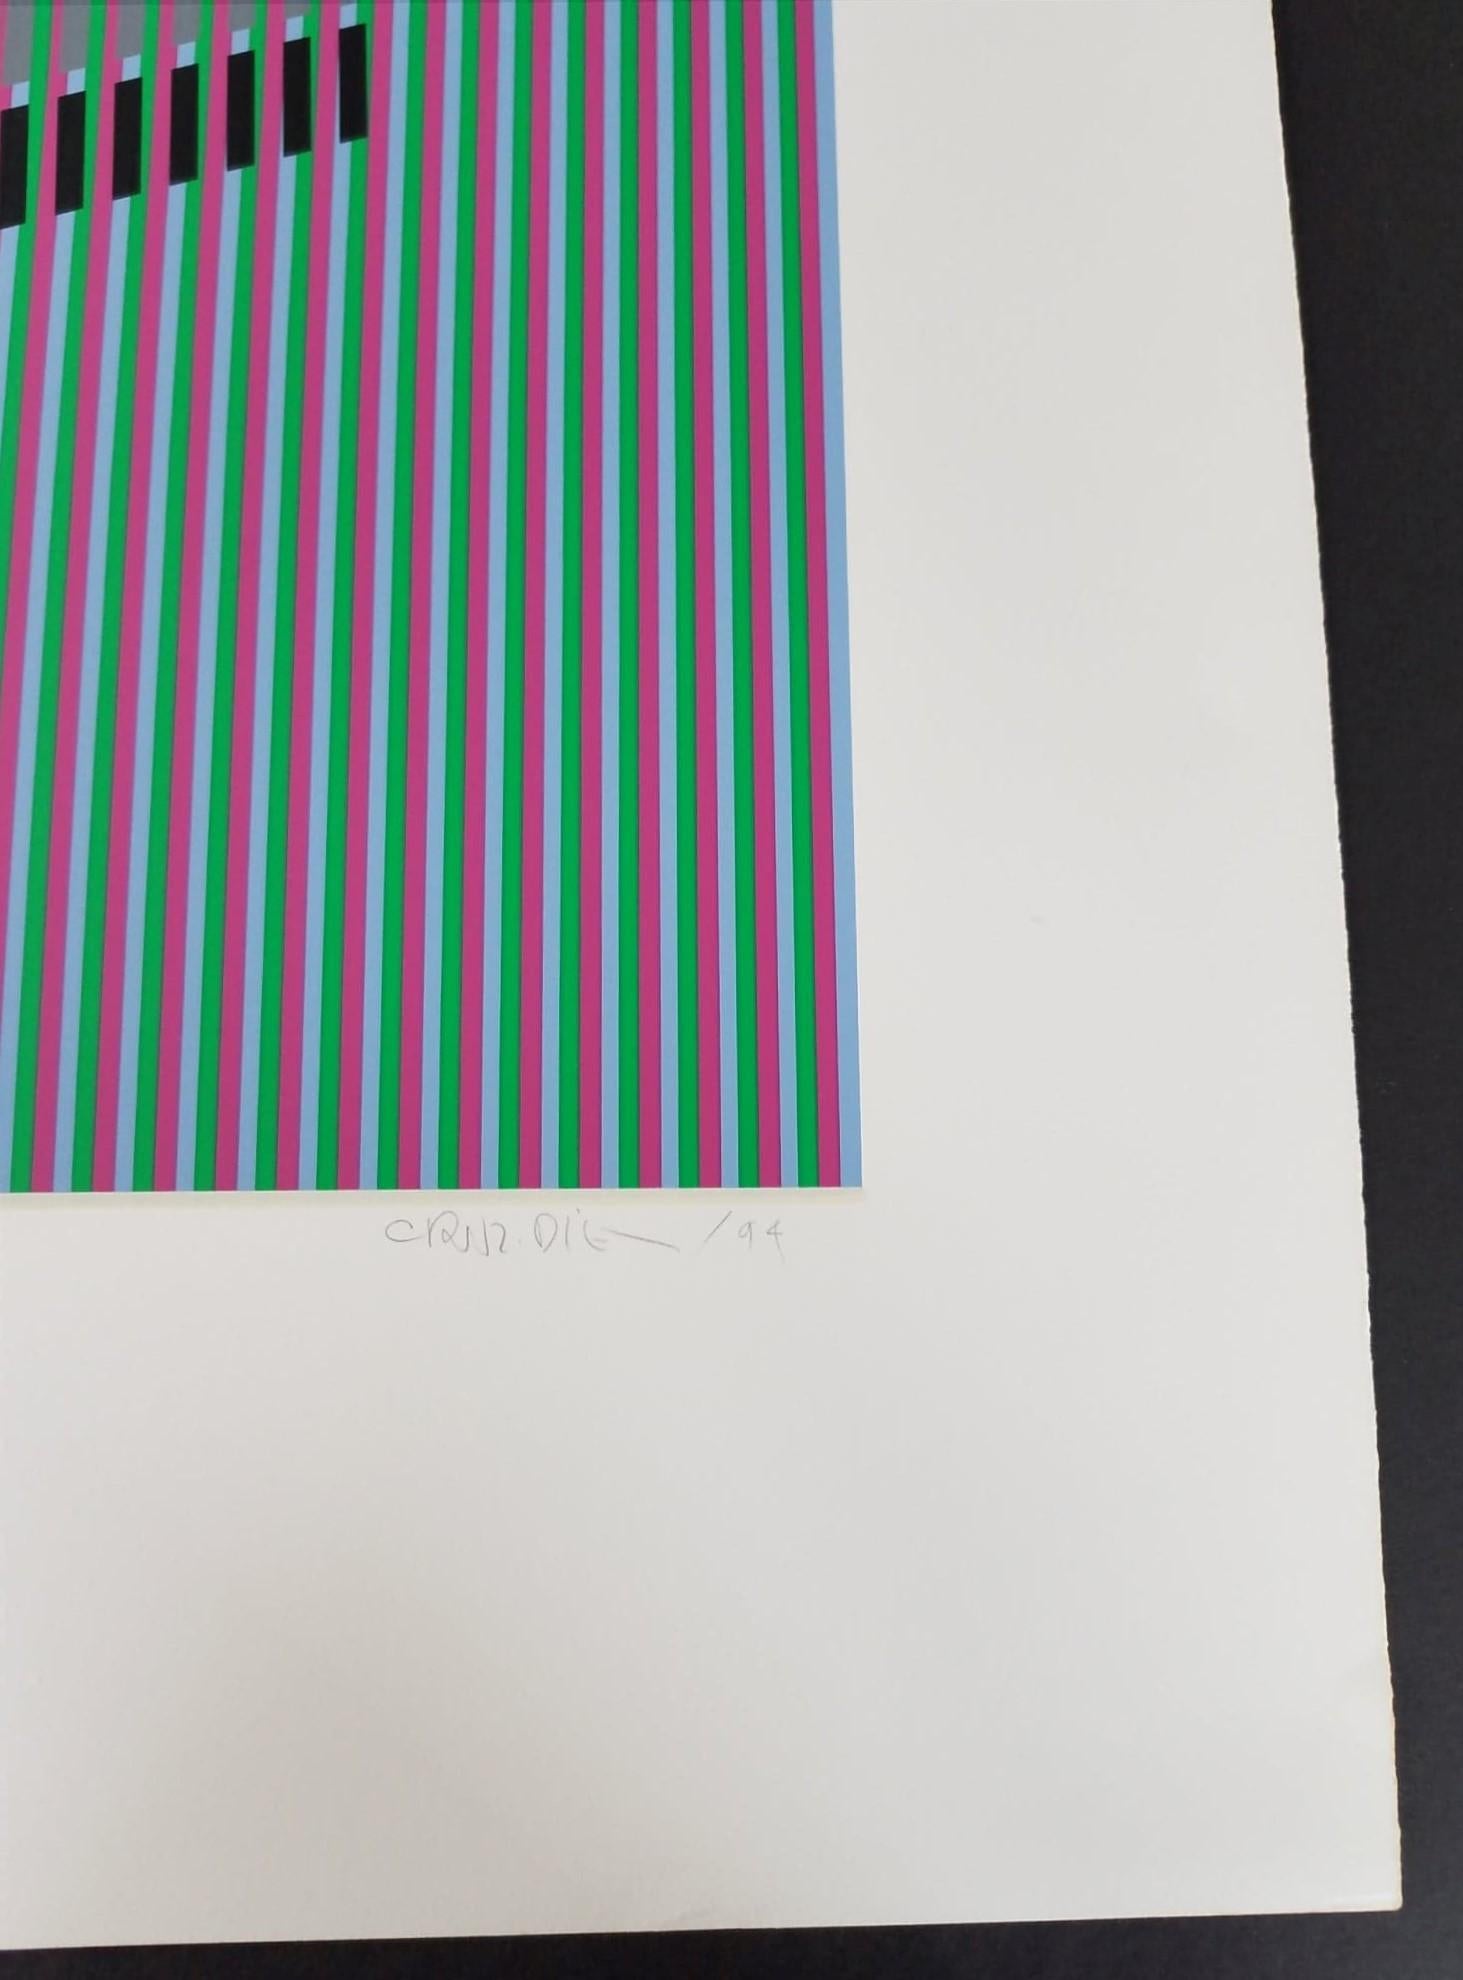 Untitled (Chromatic Induction) - Abstract Geometric Print by Carlos Cruz-Diez